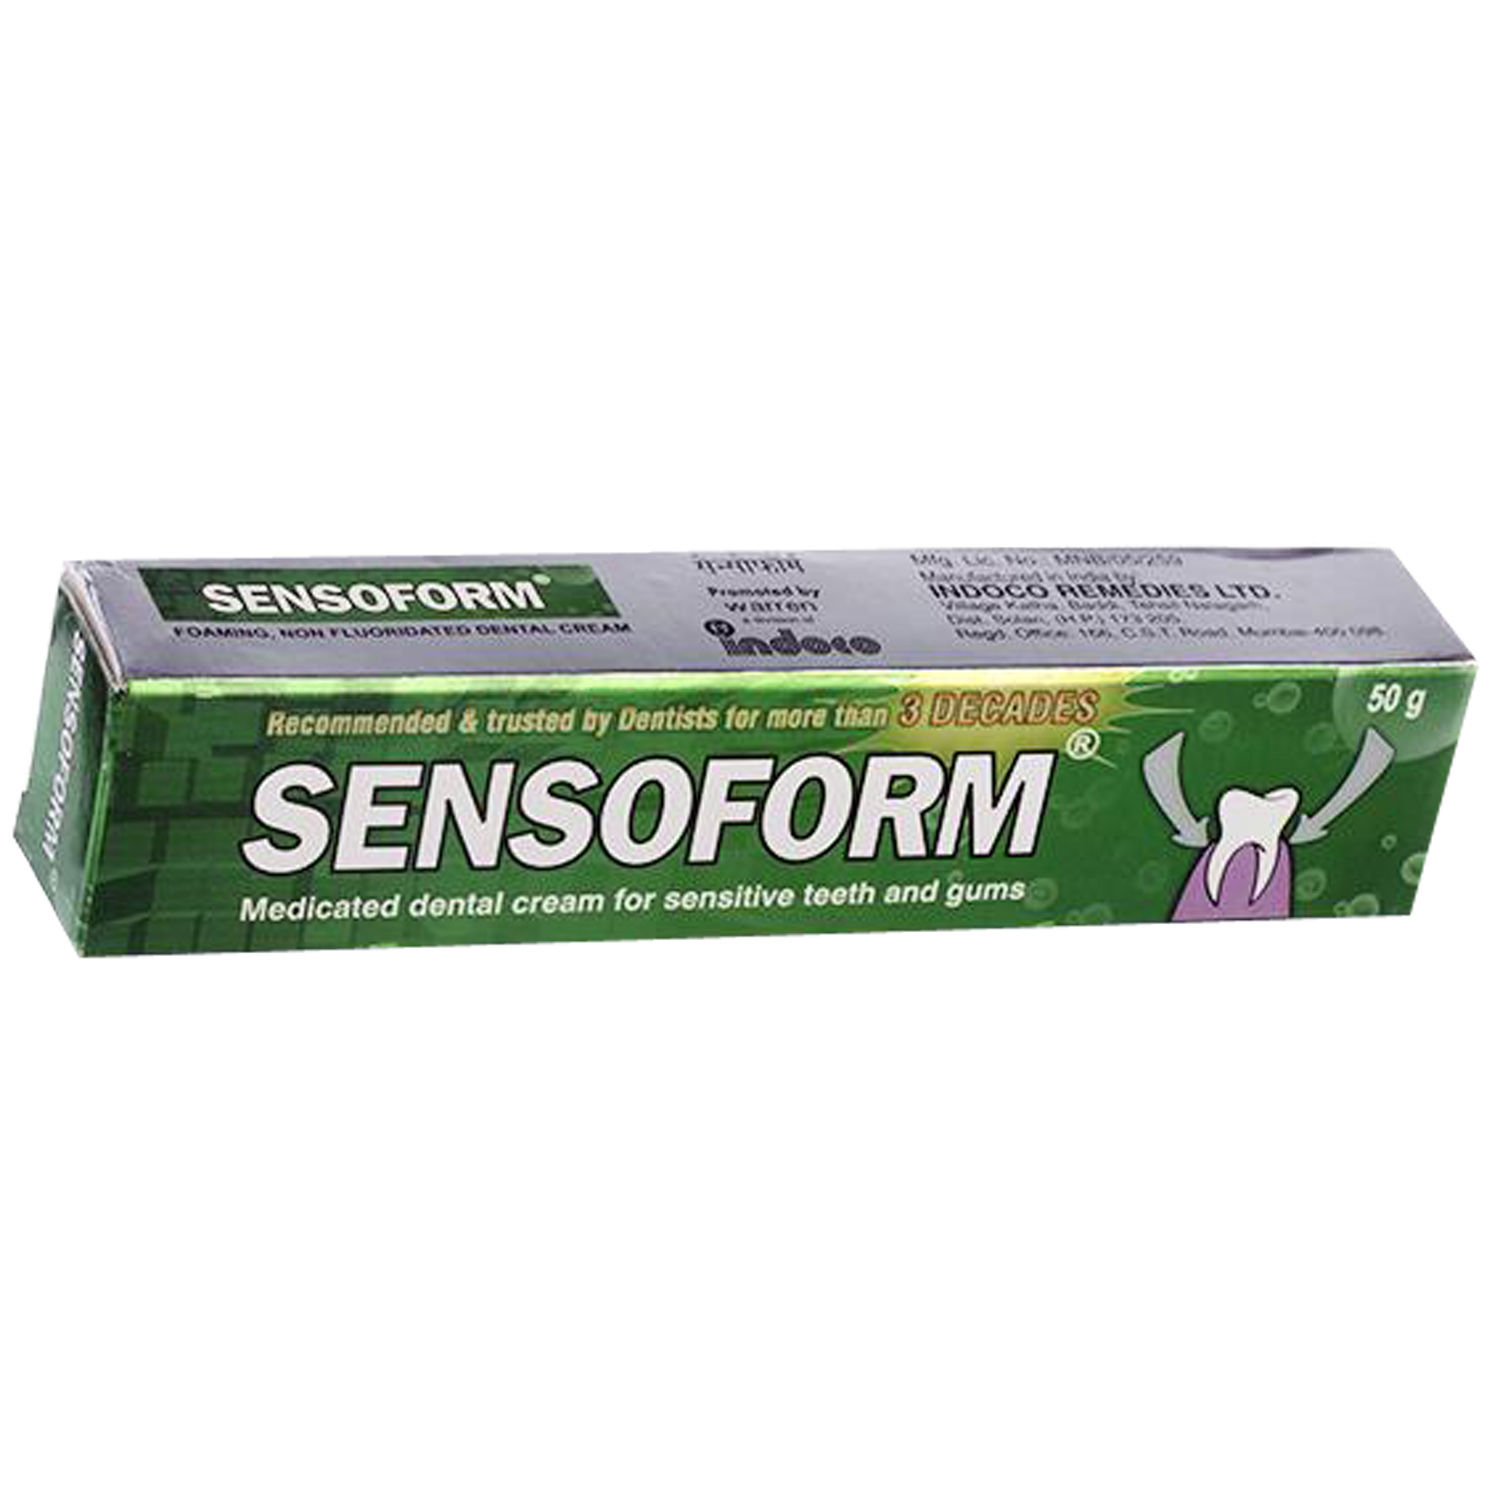 Buy Sensoform Medicated Dental Cream, 50 gm Online